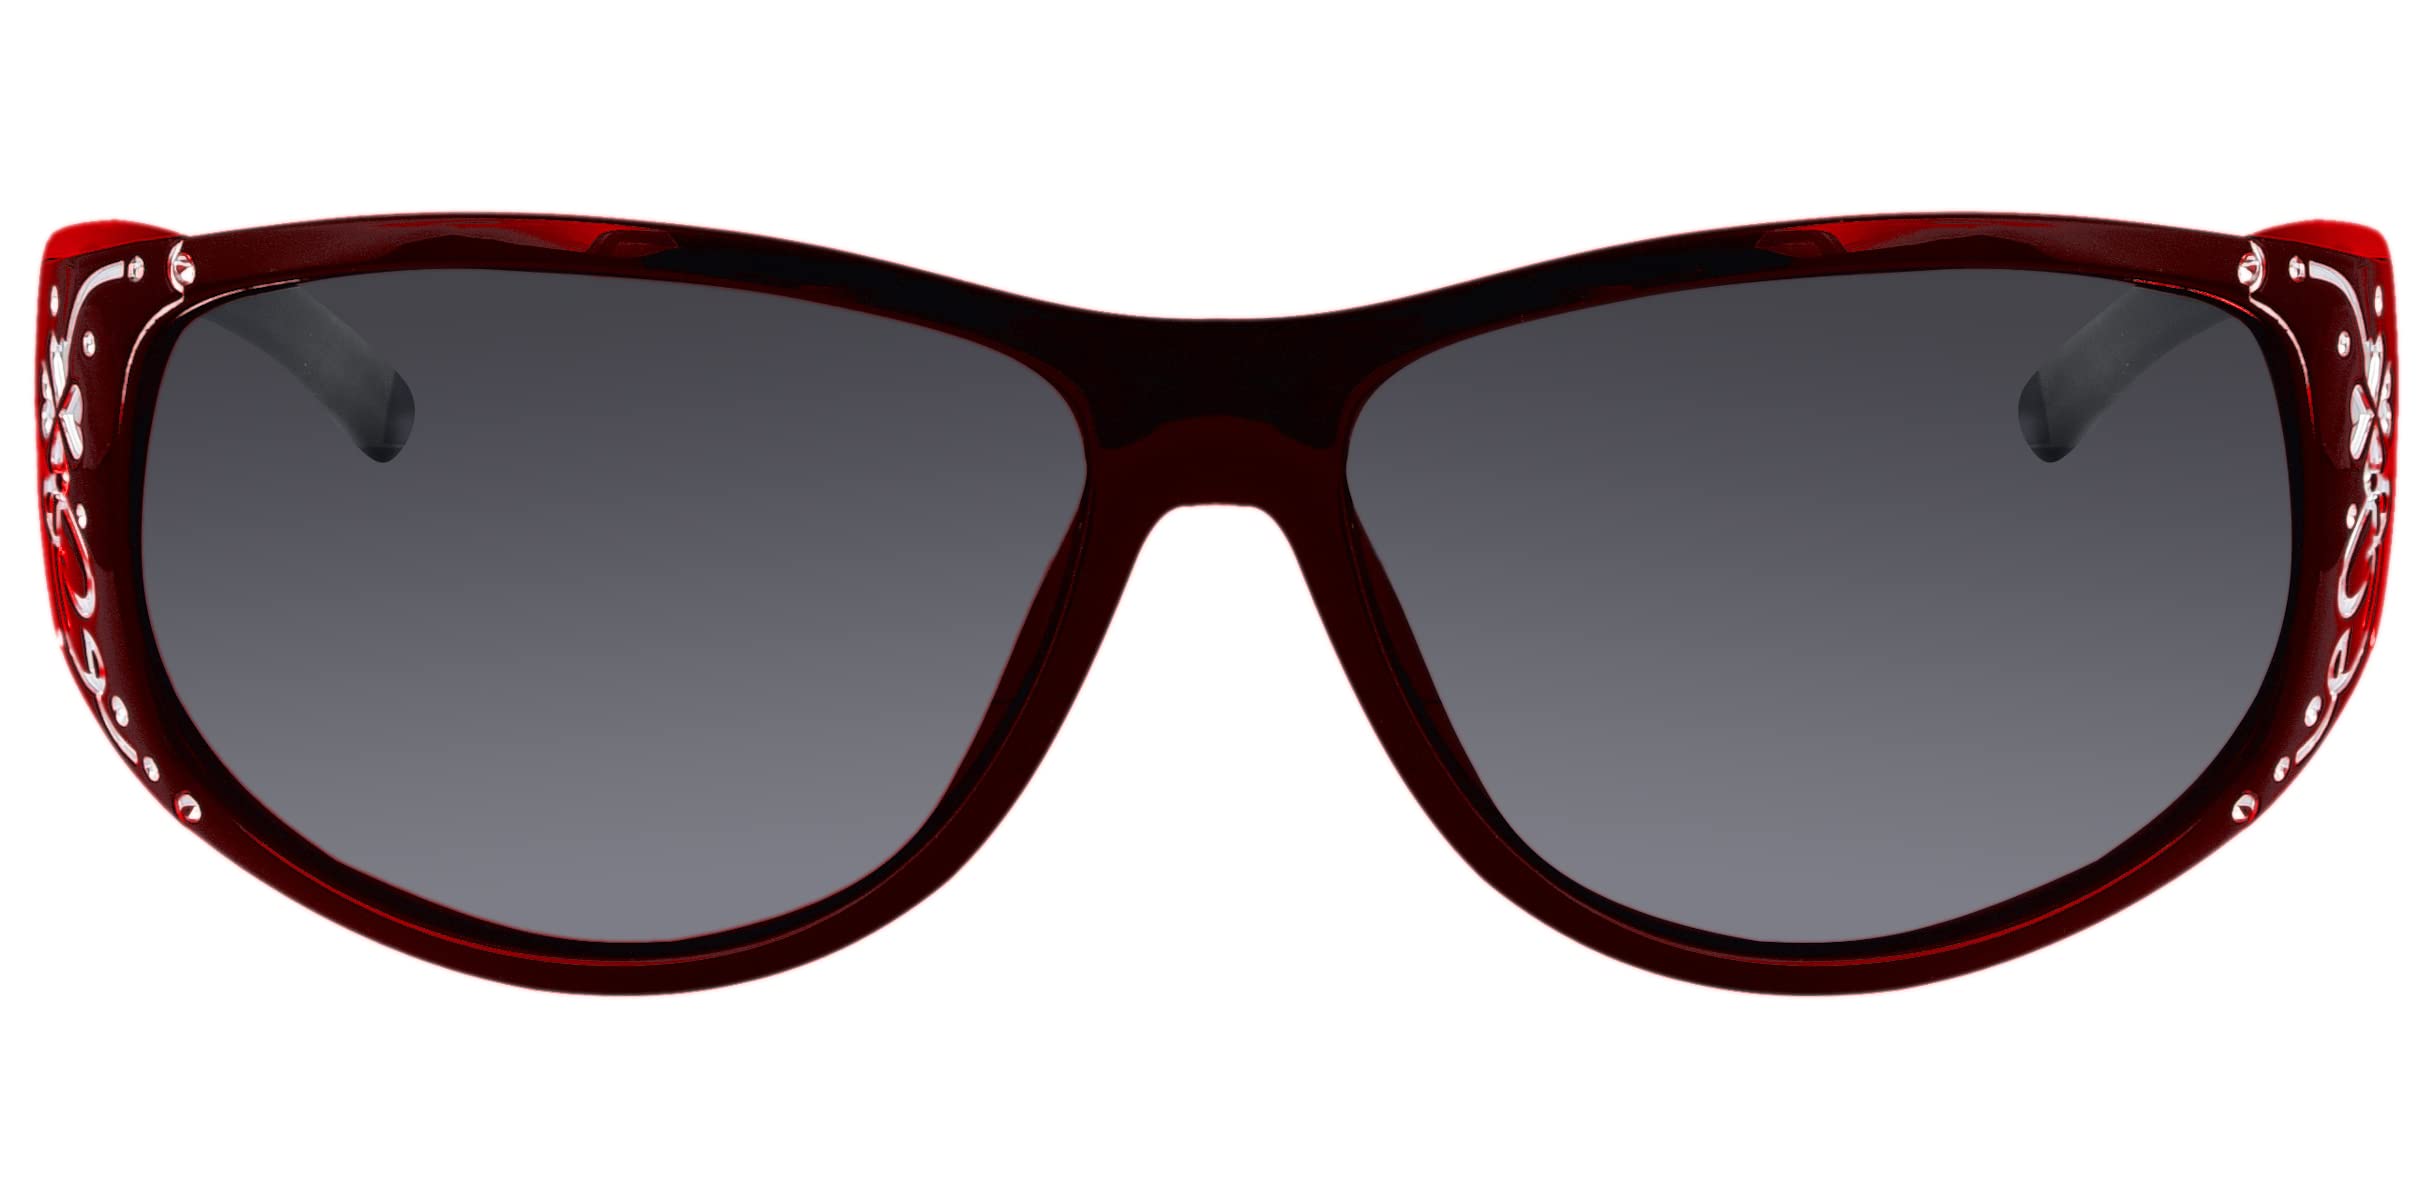 Polarized Sunglasses for Women - Premium Fashion Sunglasses - HZ Series Chic Womens Designer Sunglasses